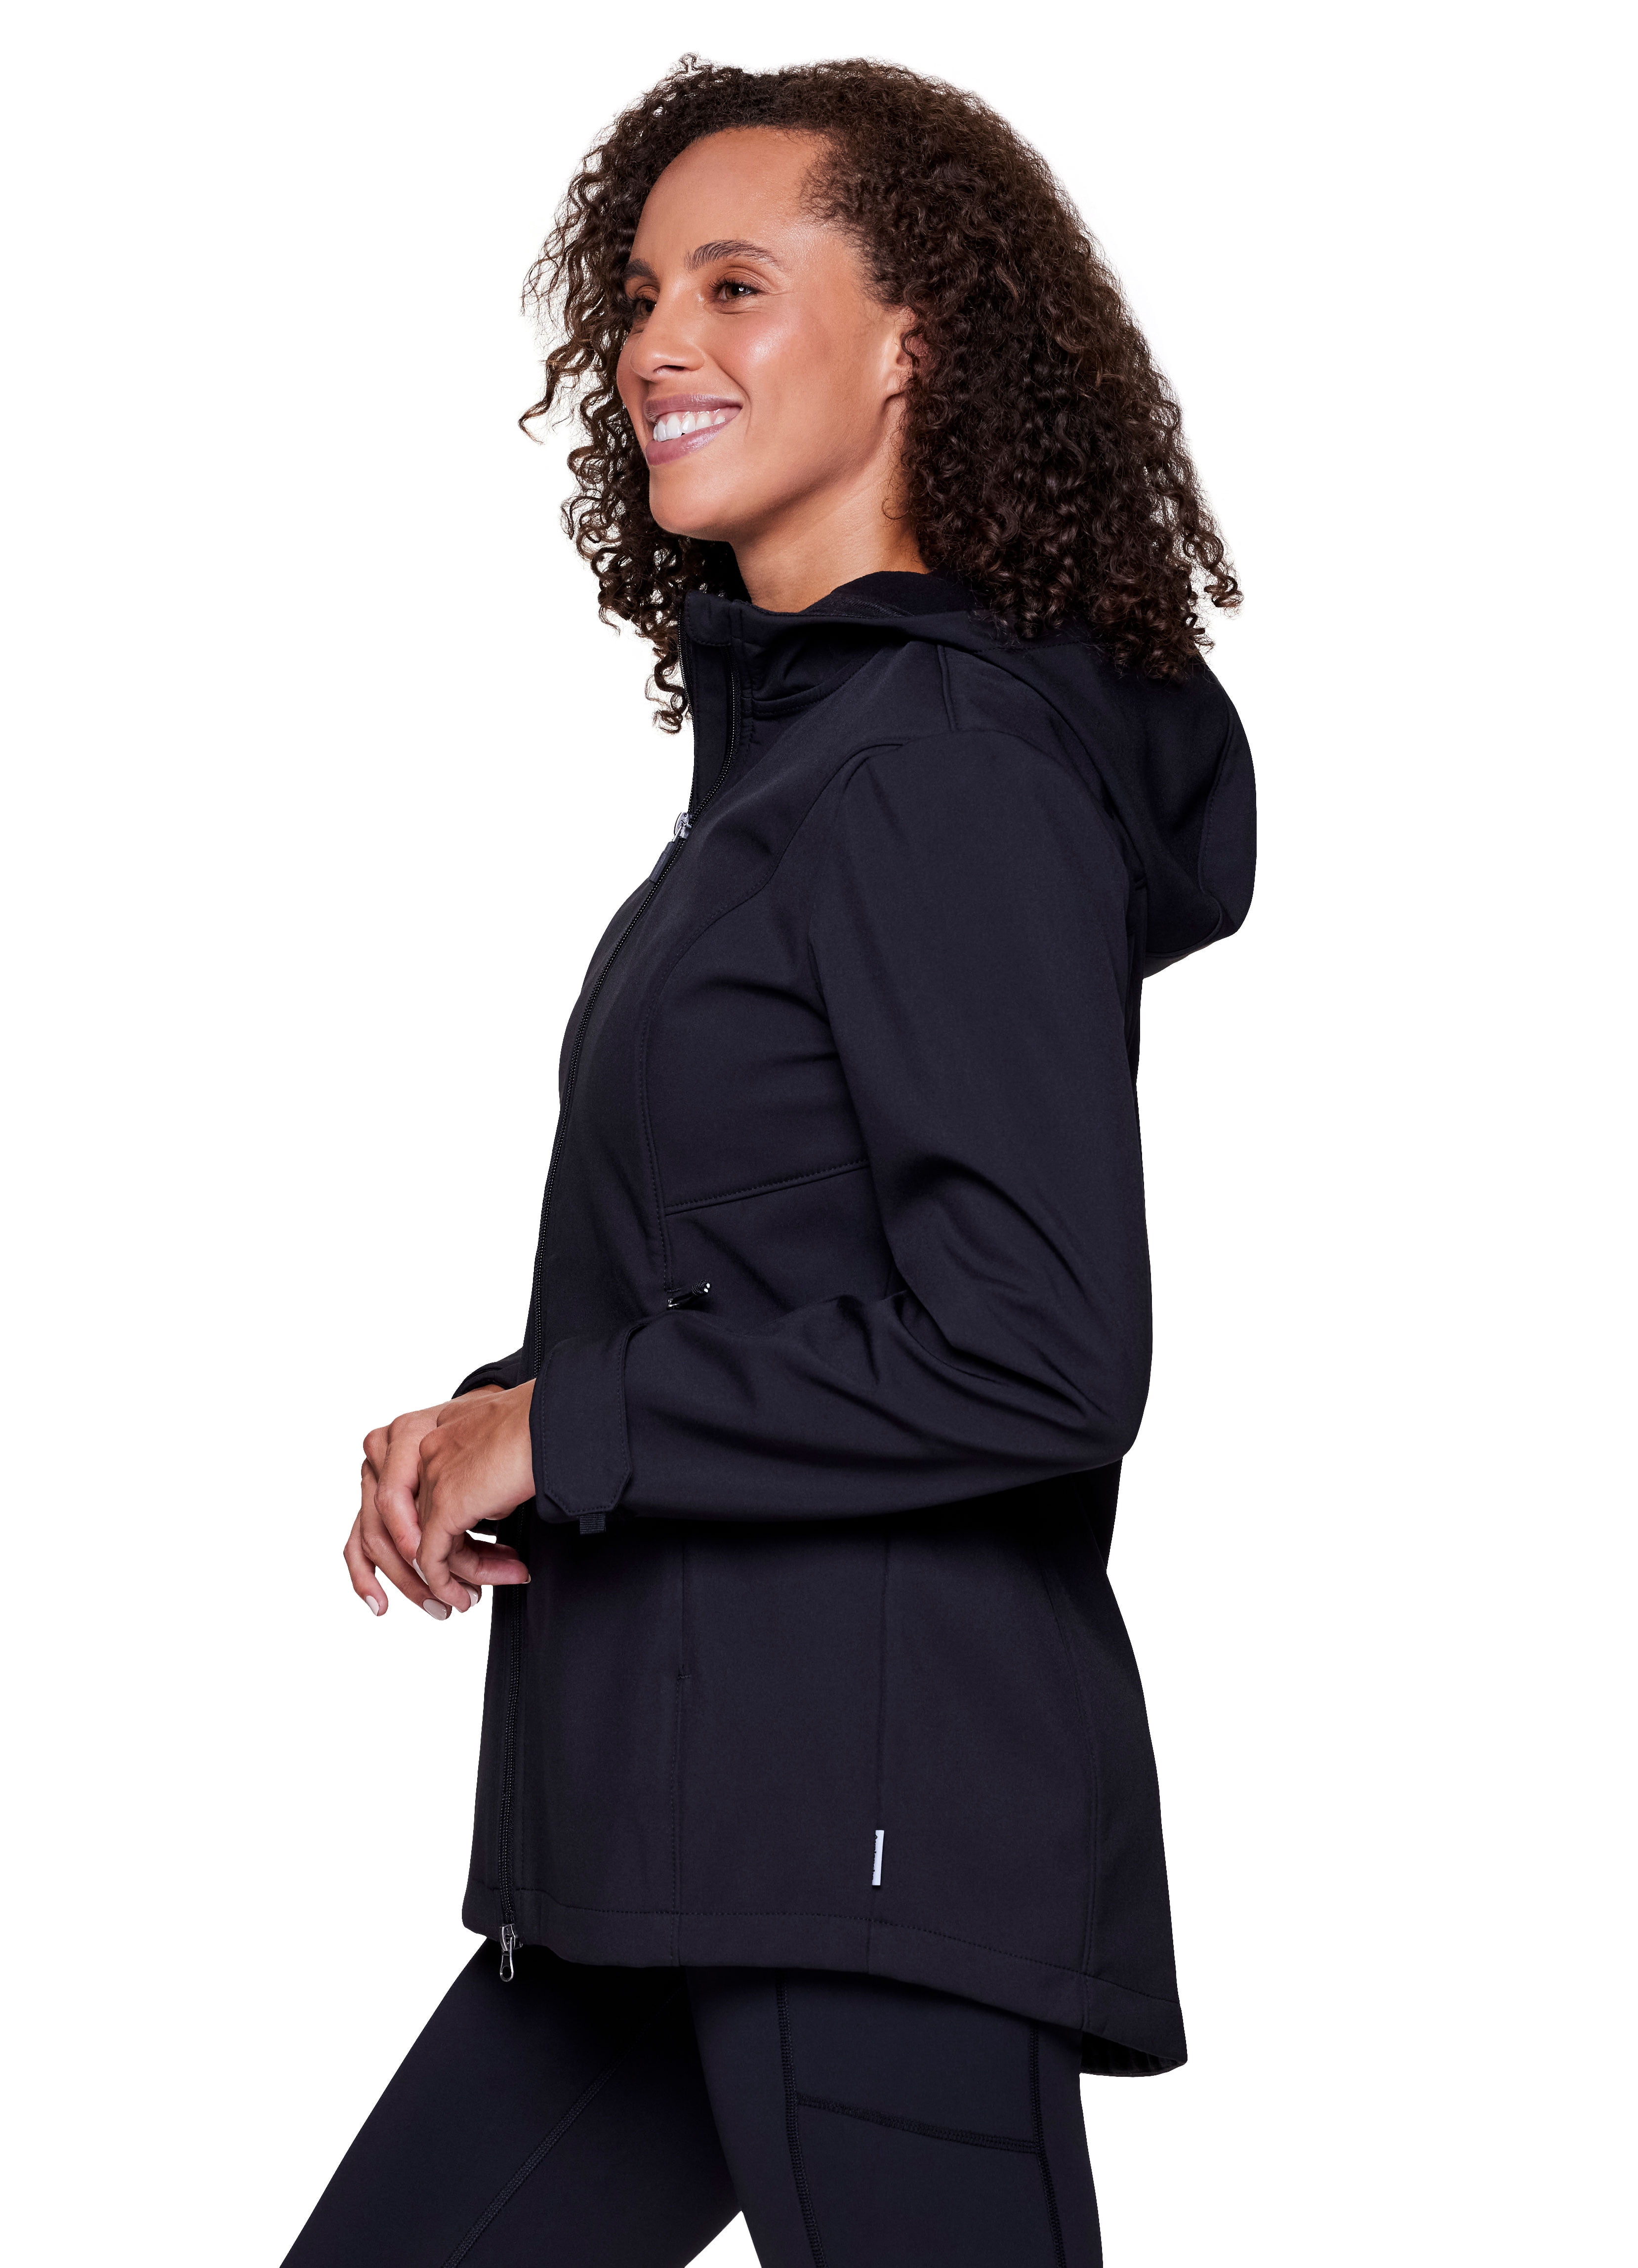 Avalanche Women's Soft Sherpa Fleece Zip Up Jacket With Zipper Pocket 